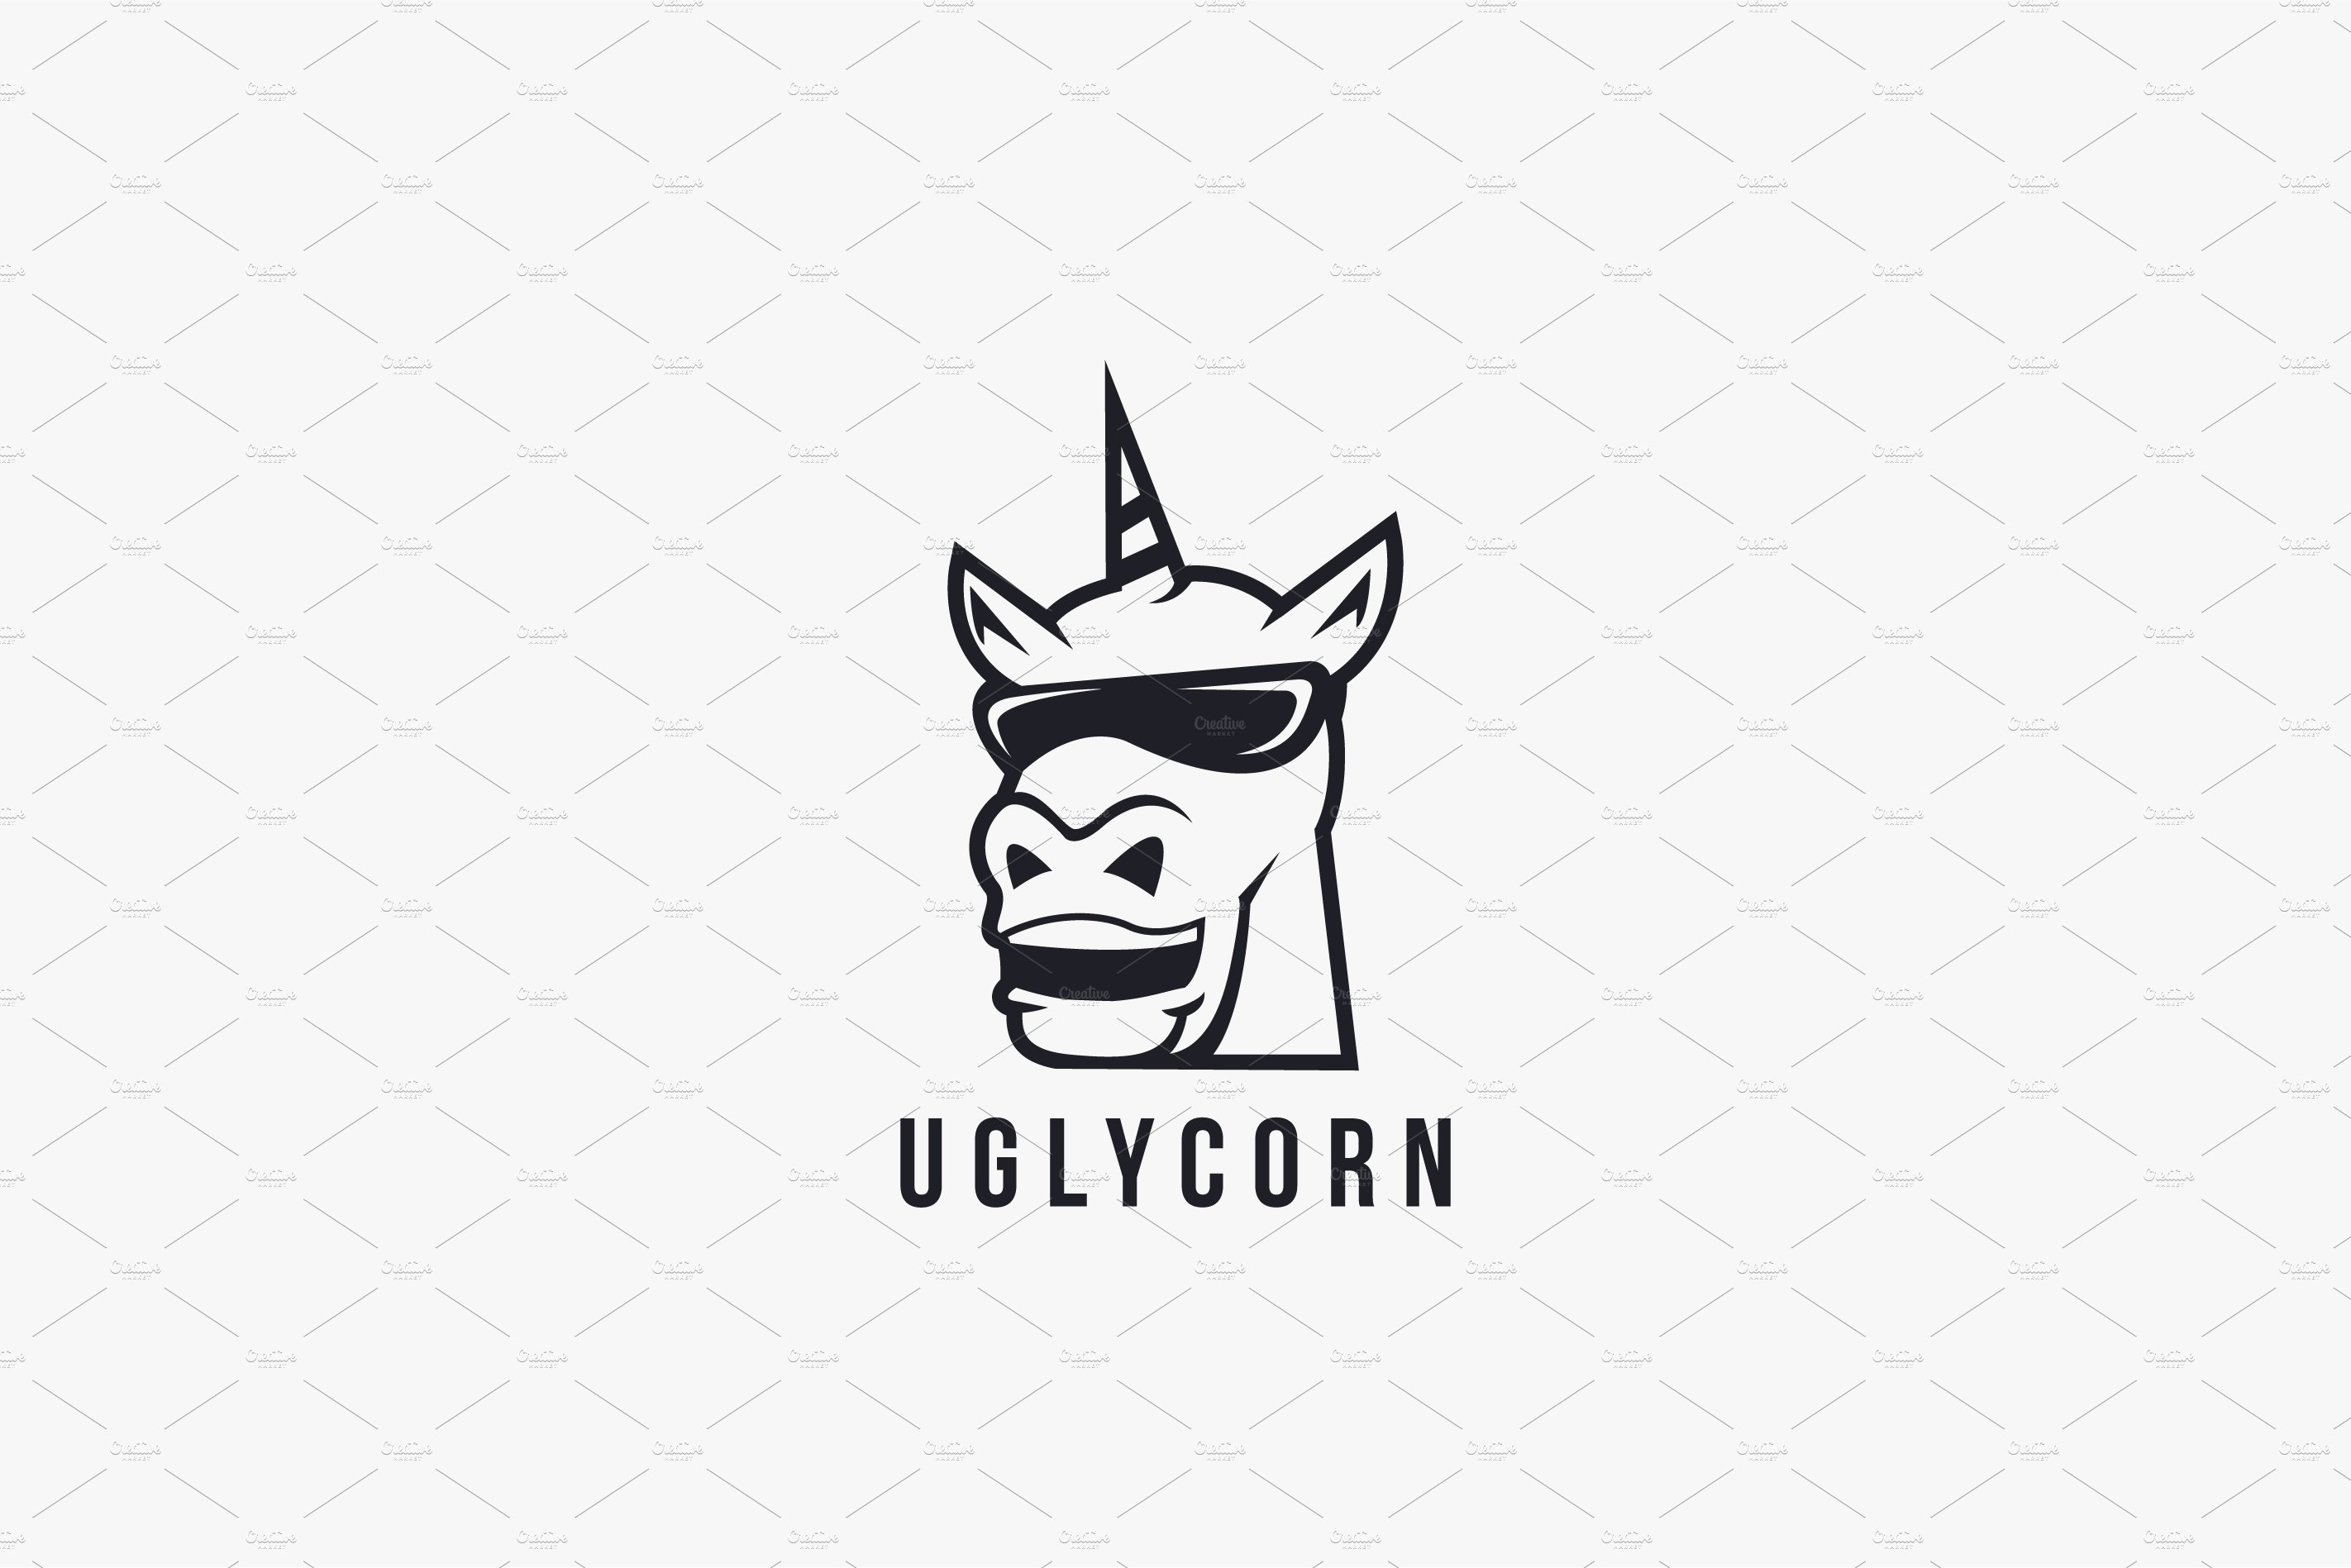 Fun laughing unicorn logo cover image.